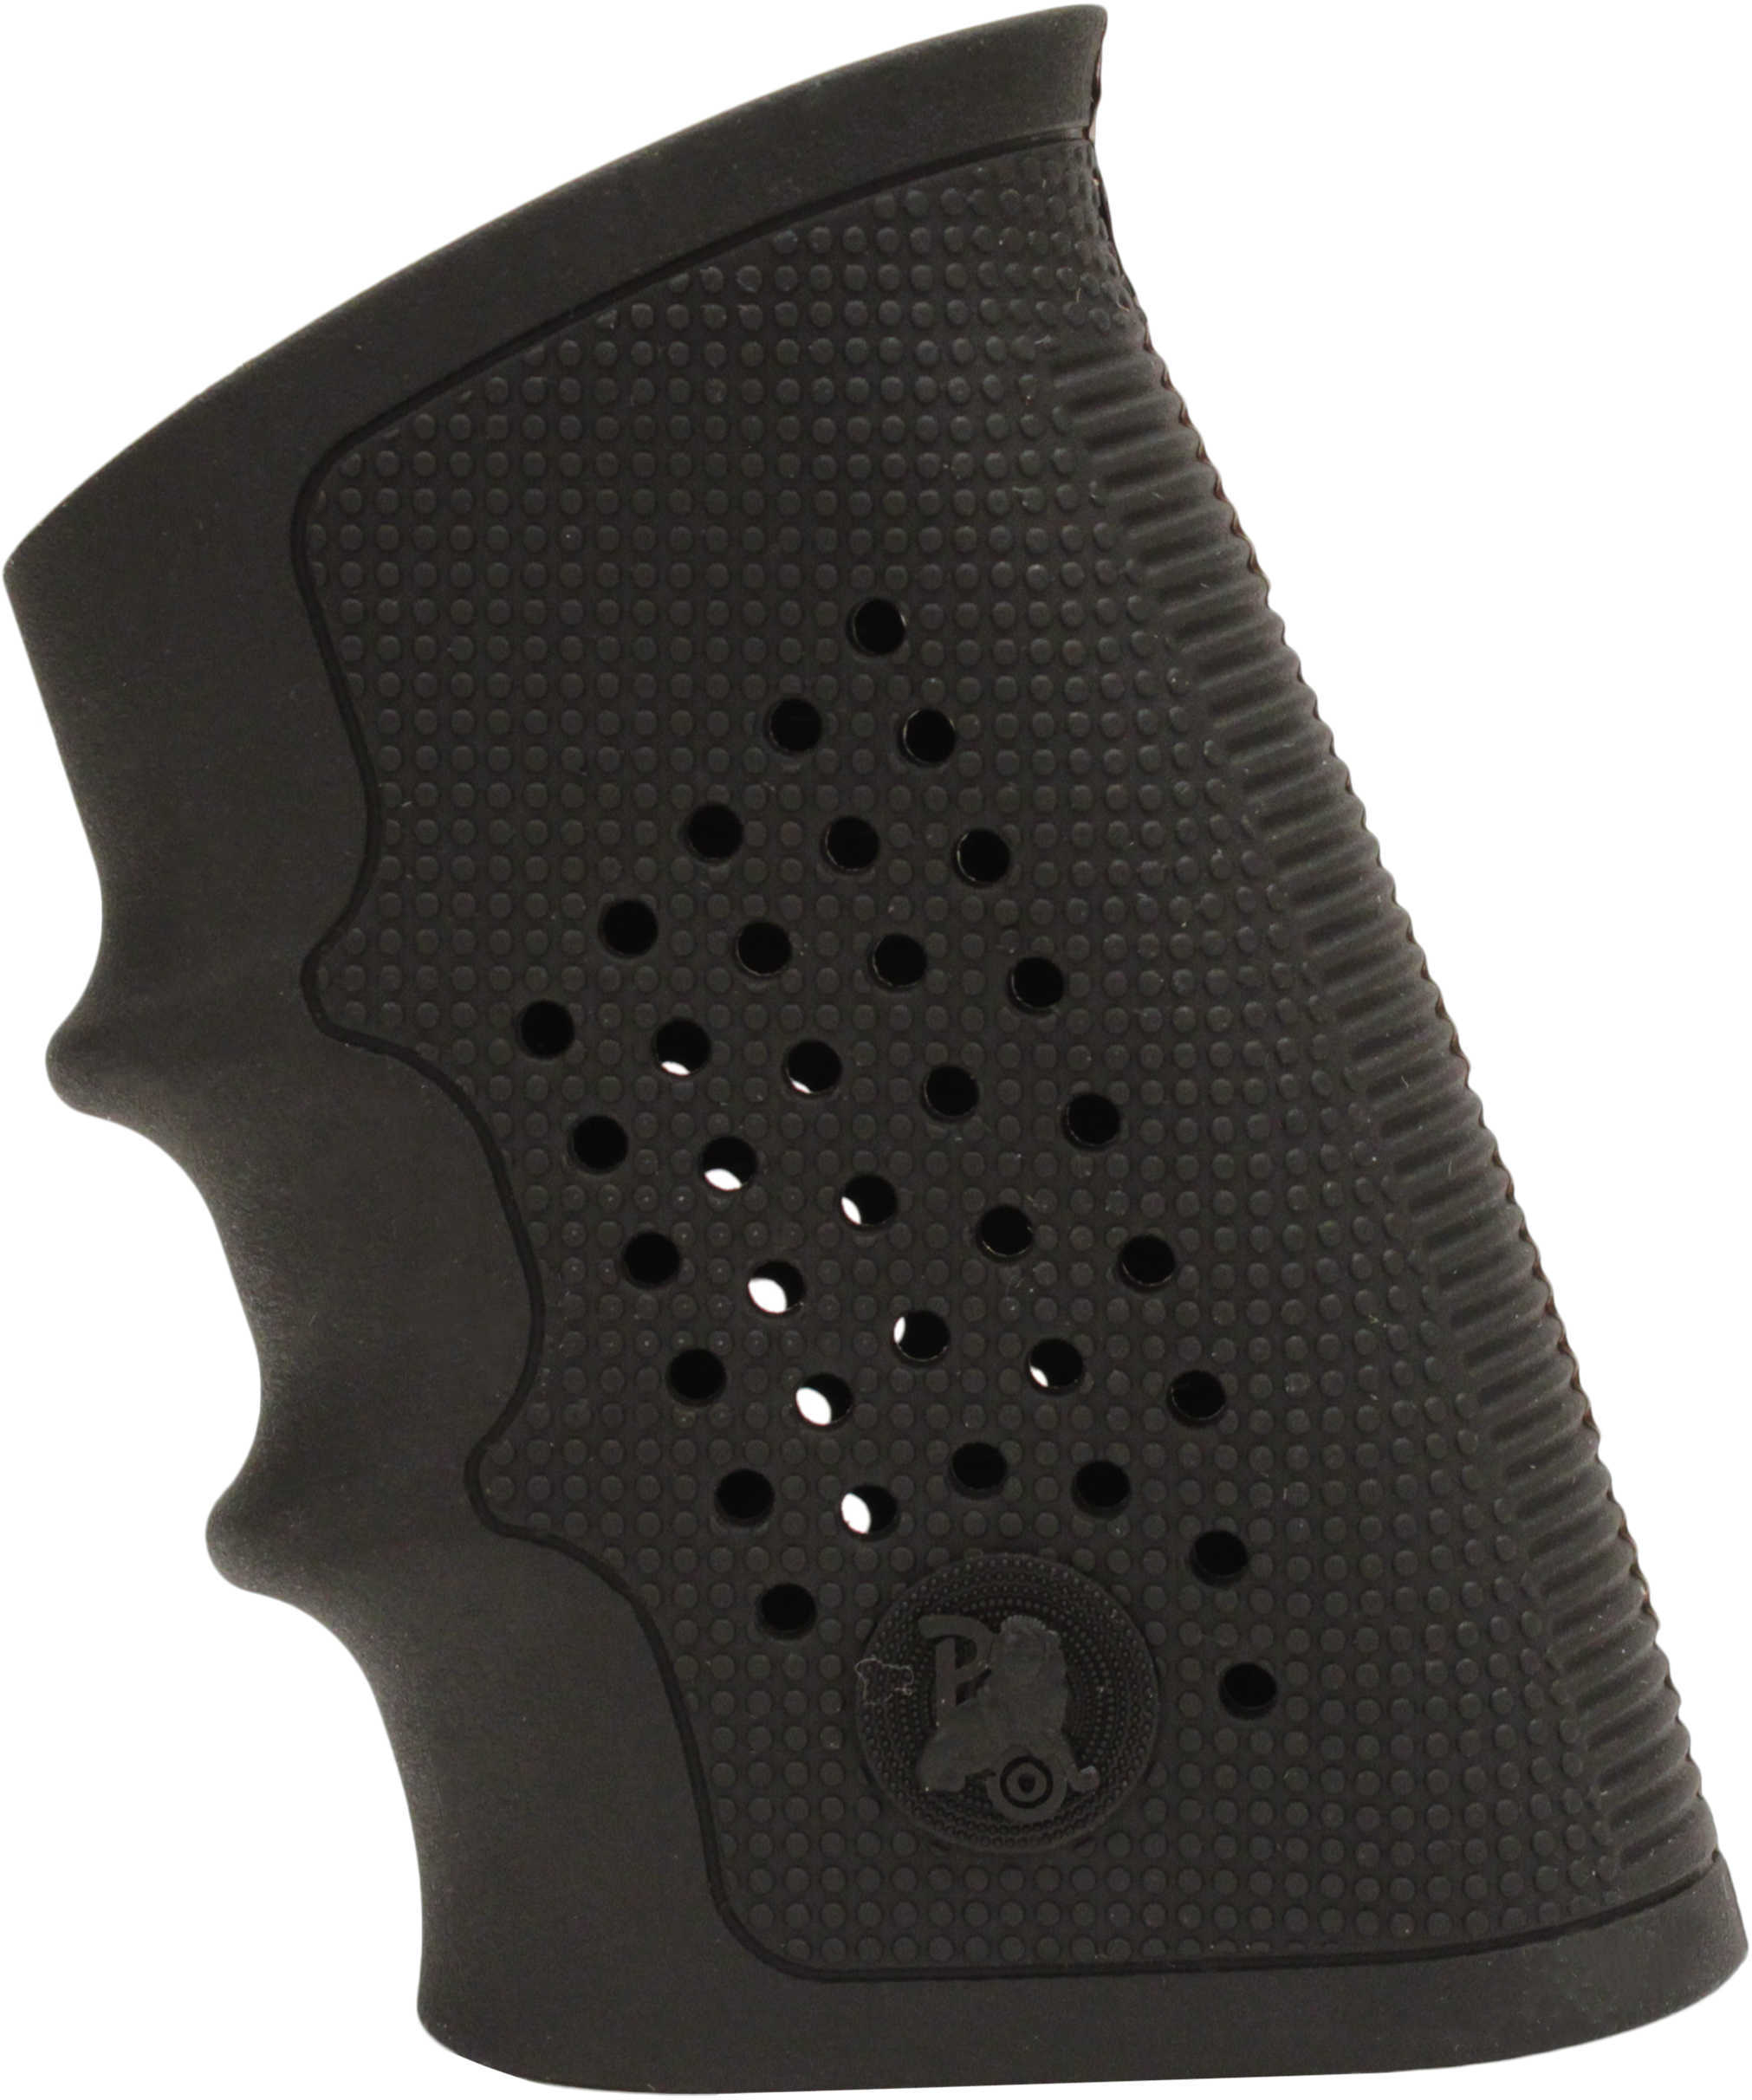 Pachmayr Tactical Grip Glove Ruger® SR9 & SR40